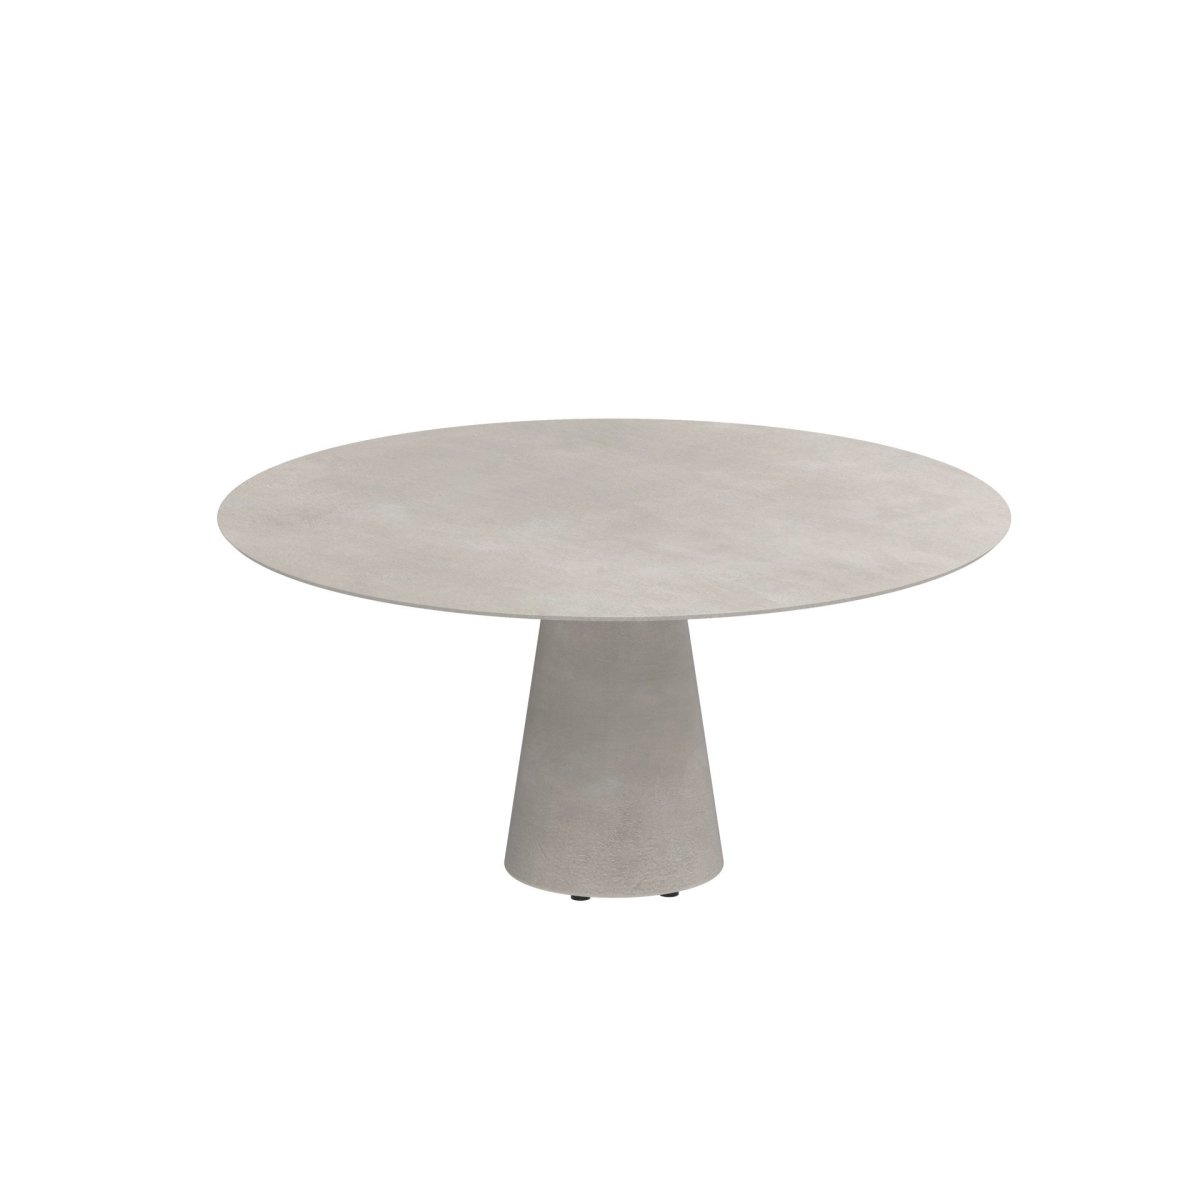 Conix 120cm Round Table